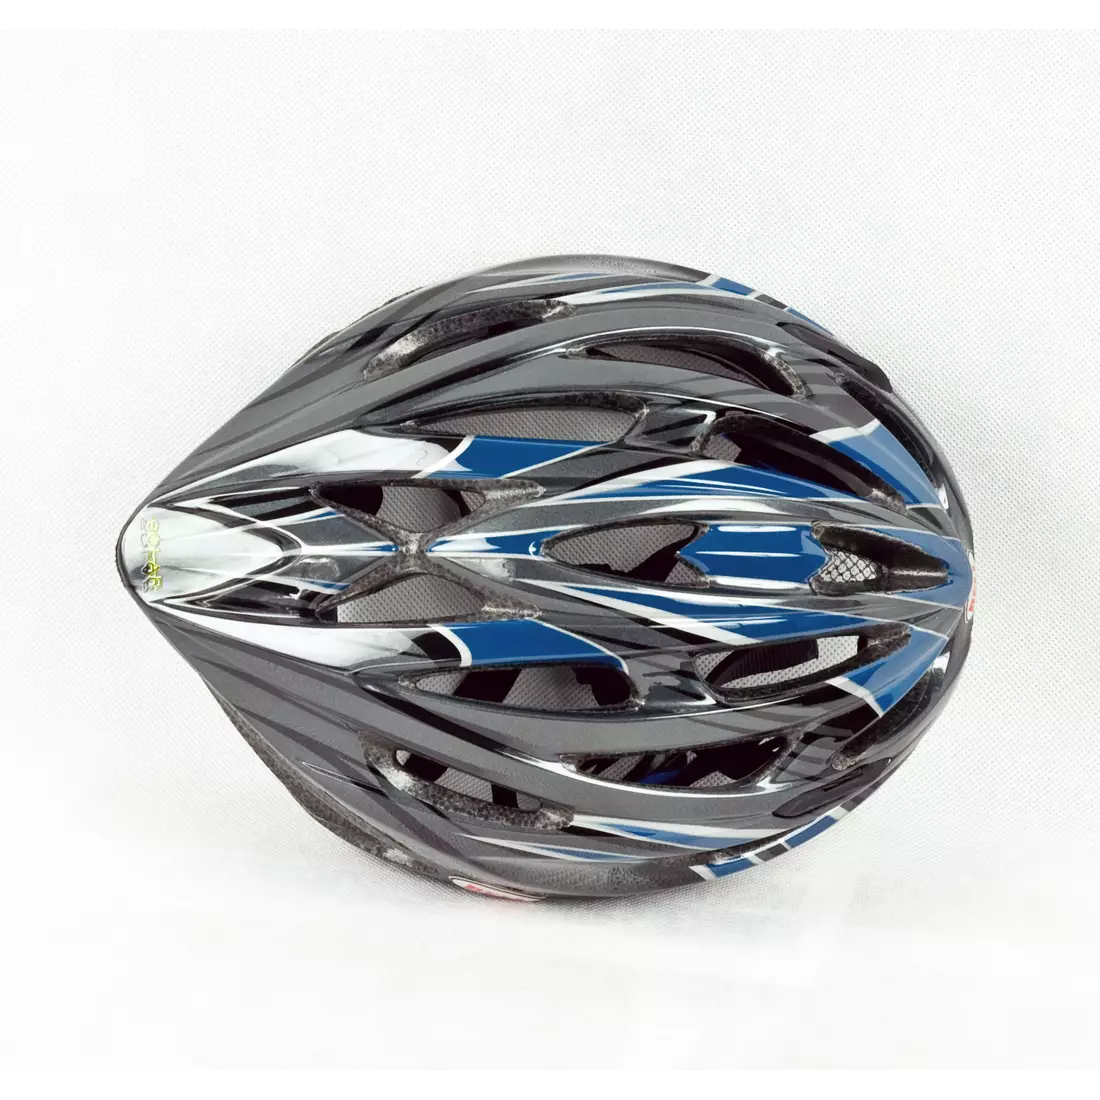 BELL SOLAR - casca de bicicleta, neagra si albastra